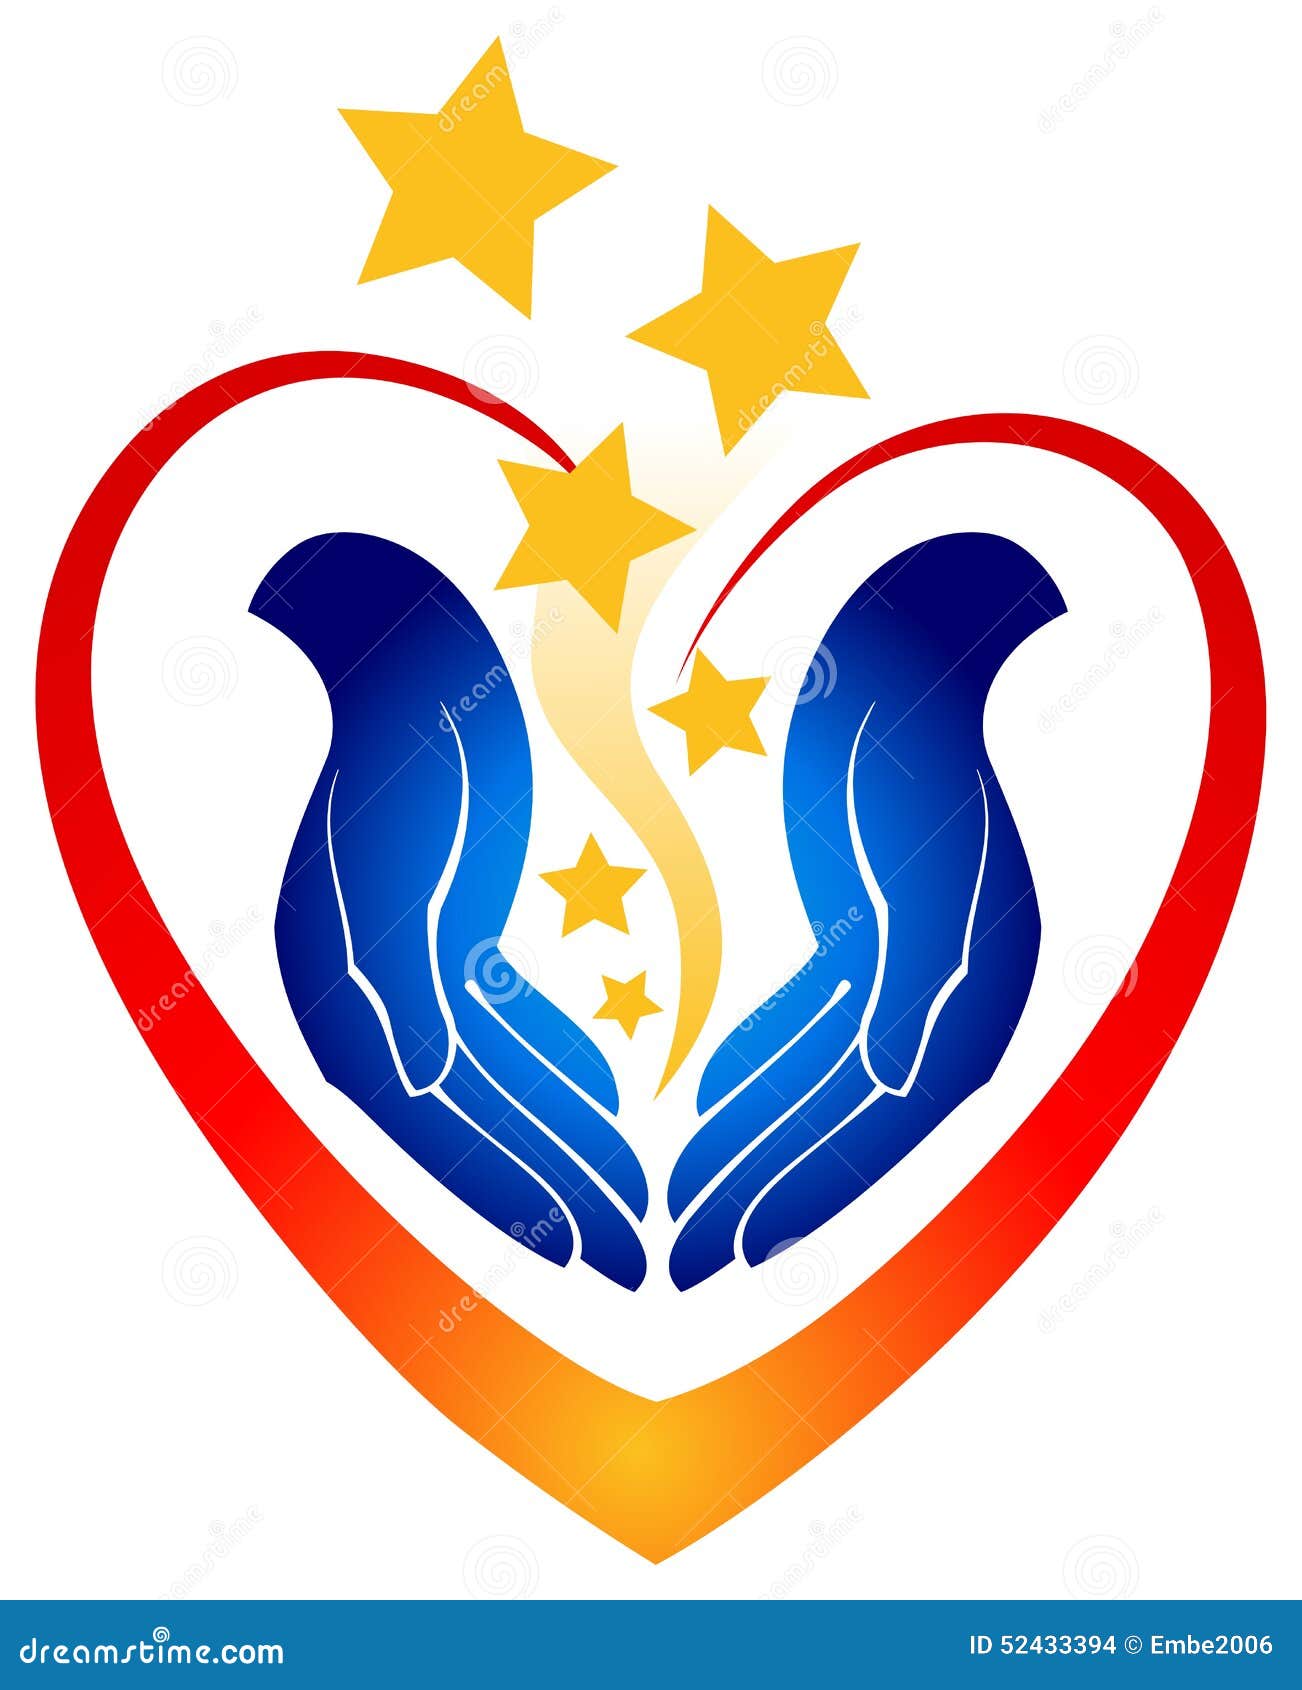 caring hands logo